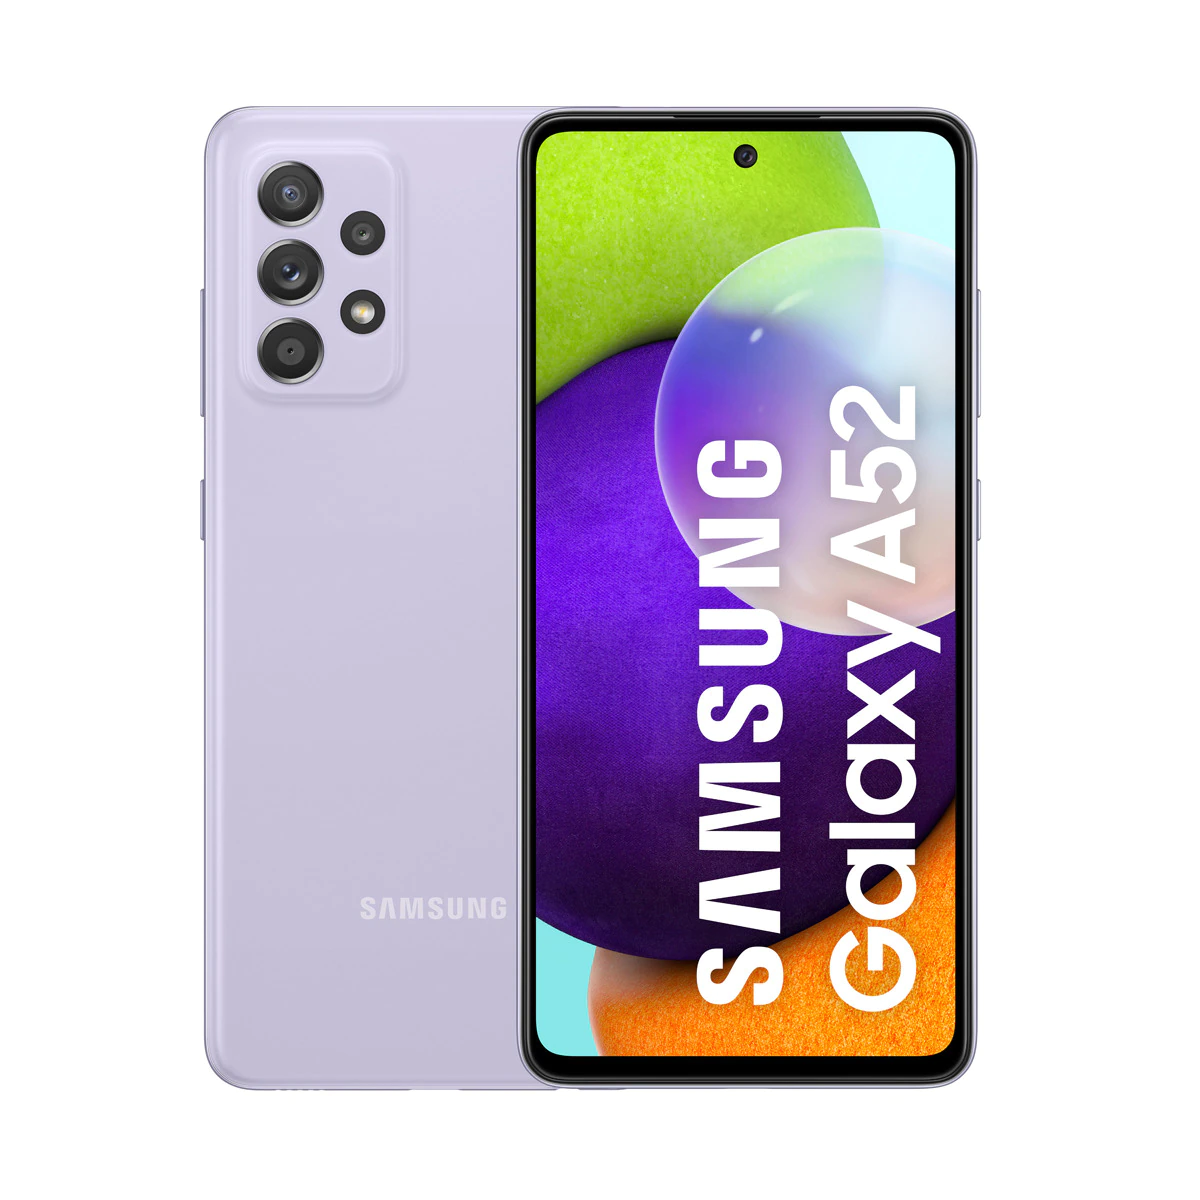 Samsung Galaxy A52 6 GB + 128 GB violeta móvil libre